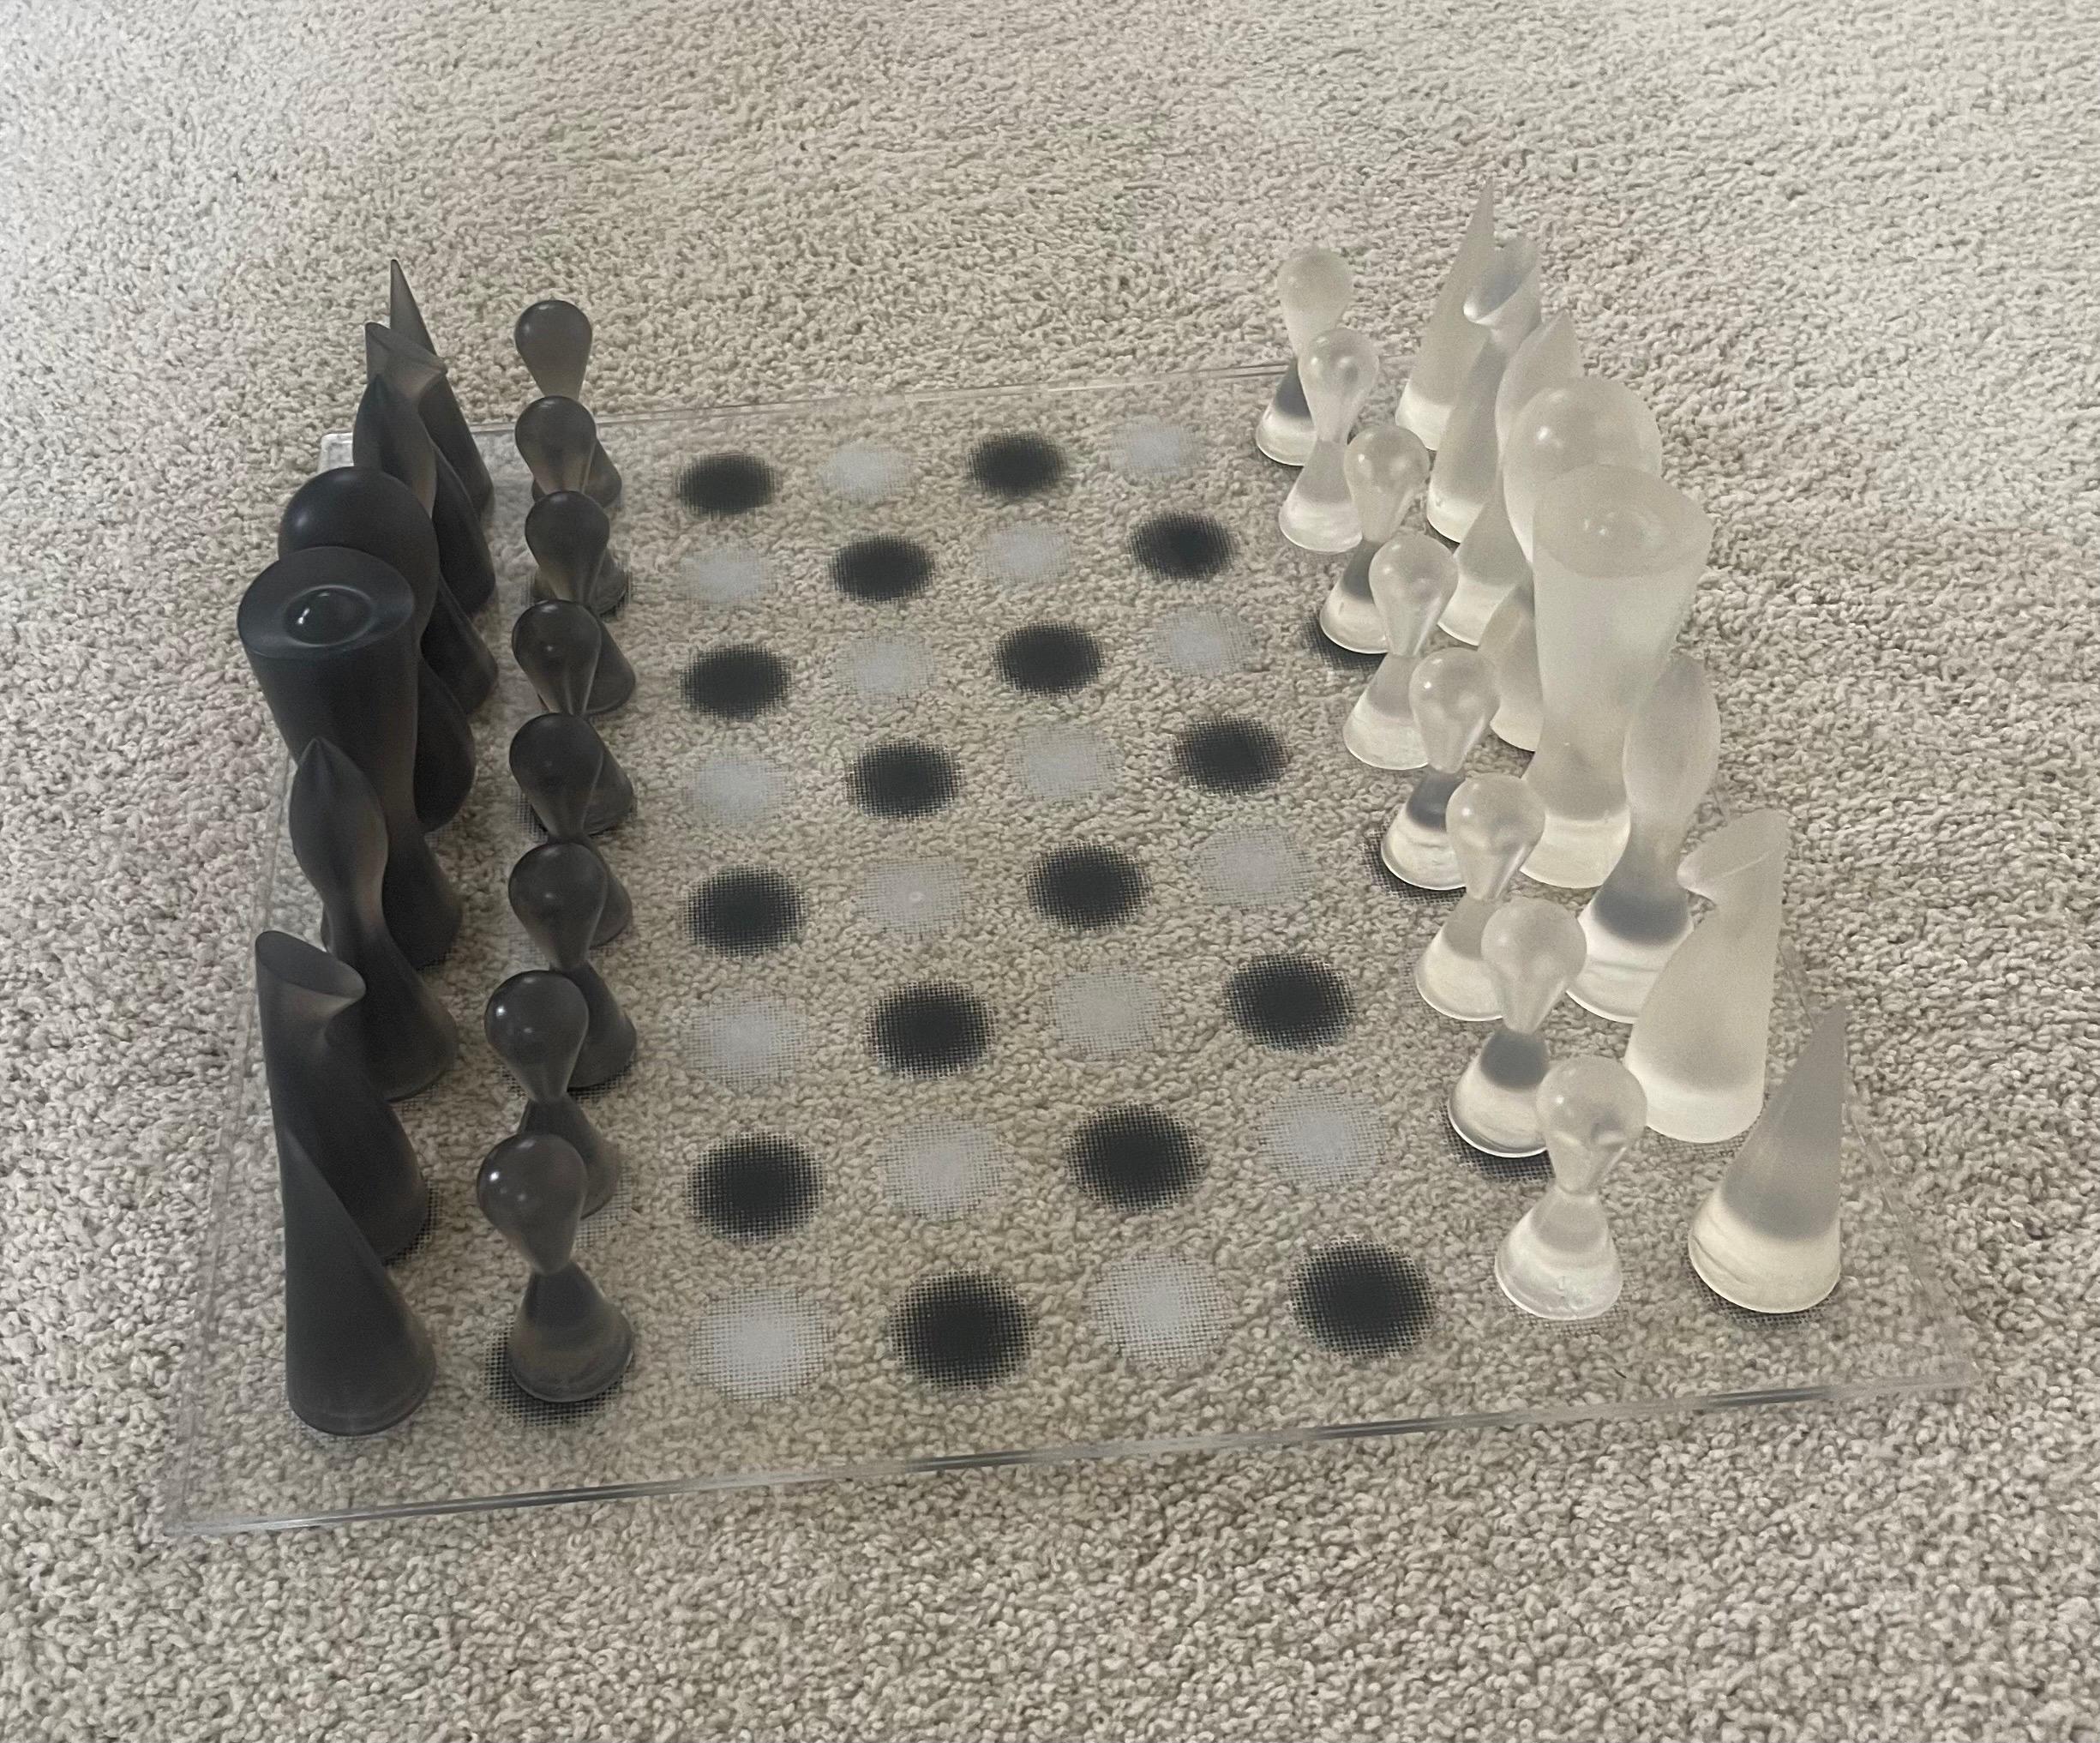 Plastic Acrylic & Rubber Modern Chess Set by Karim Rashid